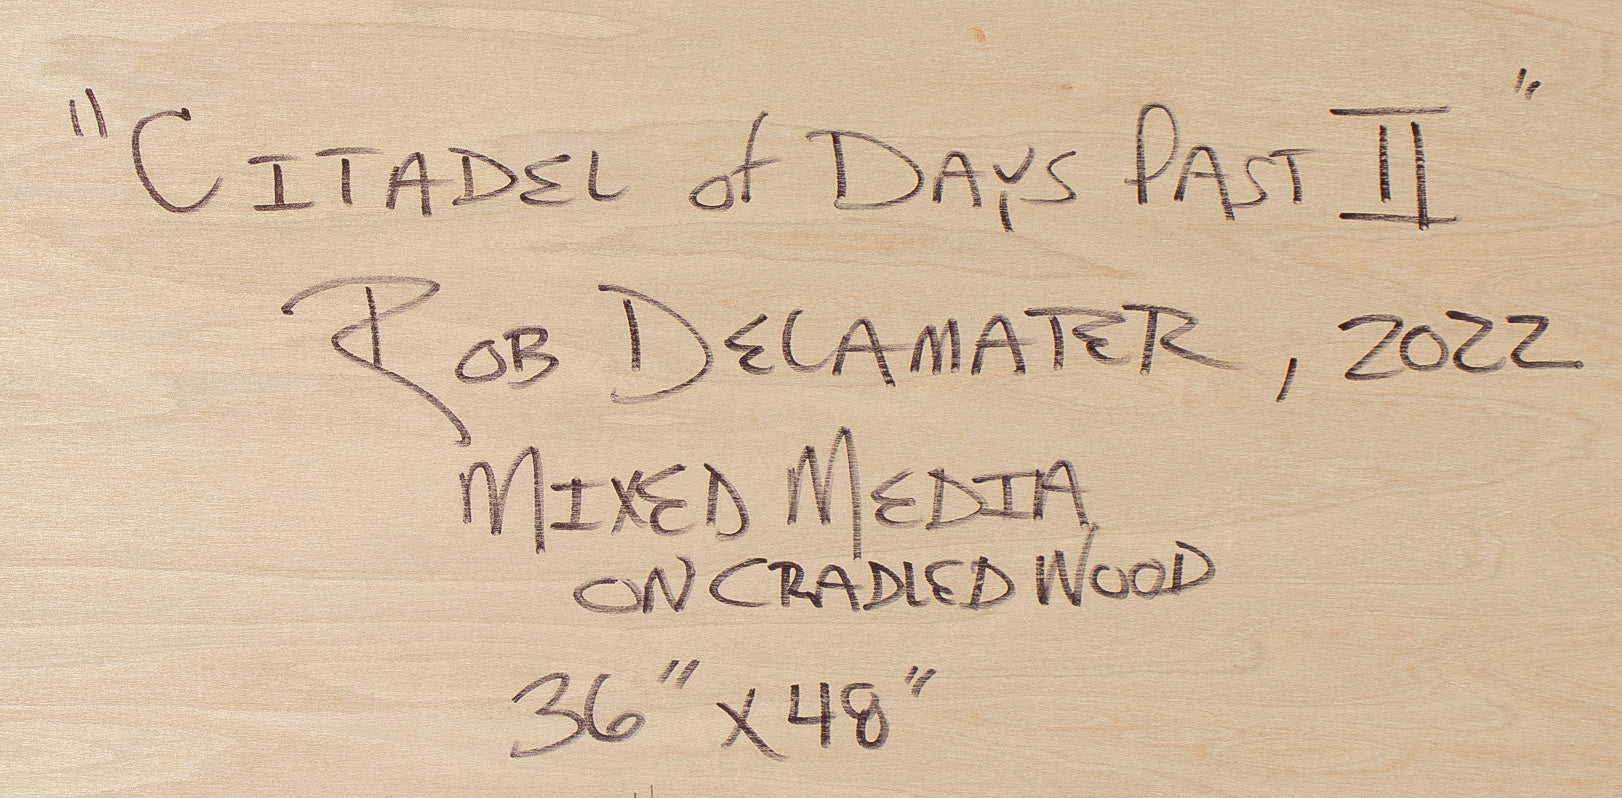 <i>Citadel of Days Past II</i> <br>2022 Mixed Media on Cradled Wood <br><br>#C1684